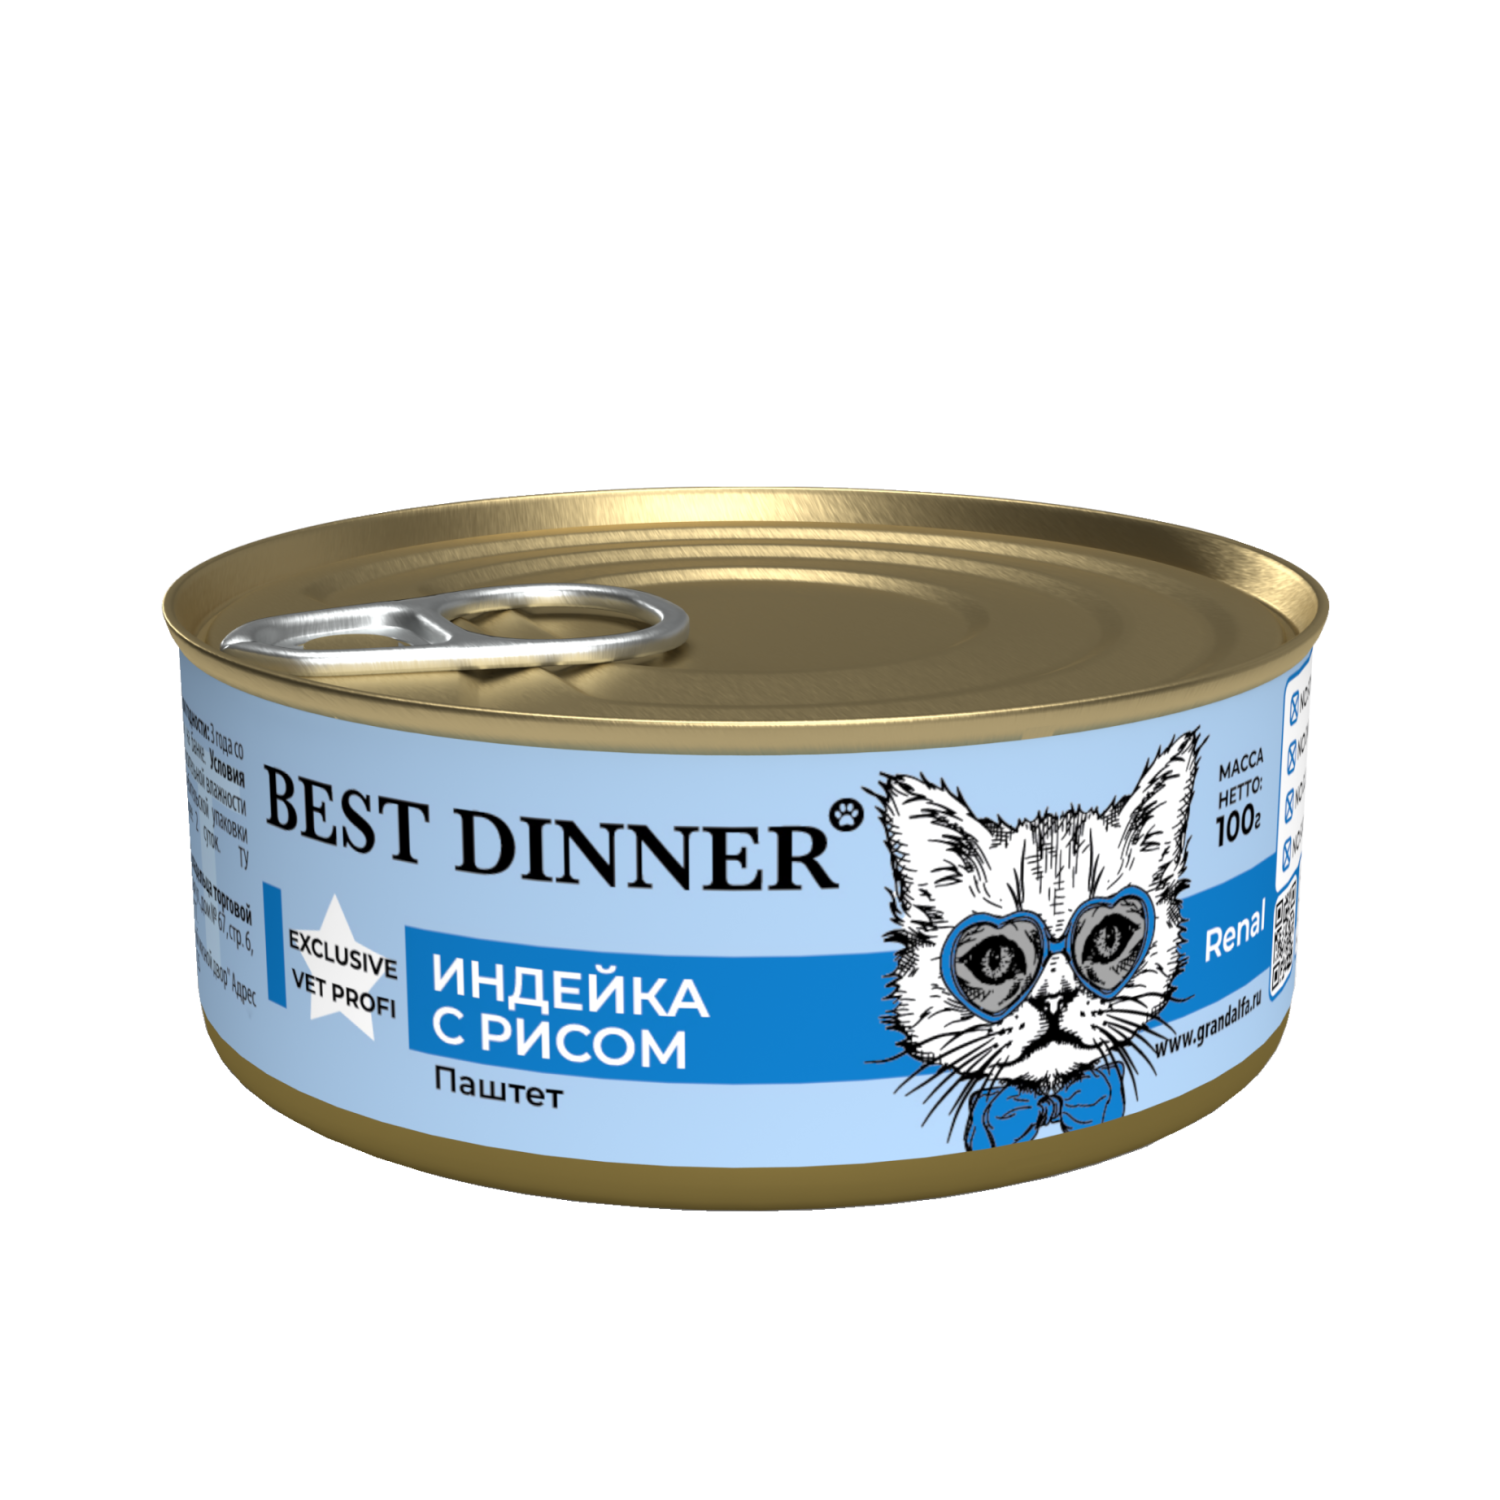 Корм для кошек Best Dinner 0.1кг Exclusive Vet Profi Renal индейка с рисом - фото 1